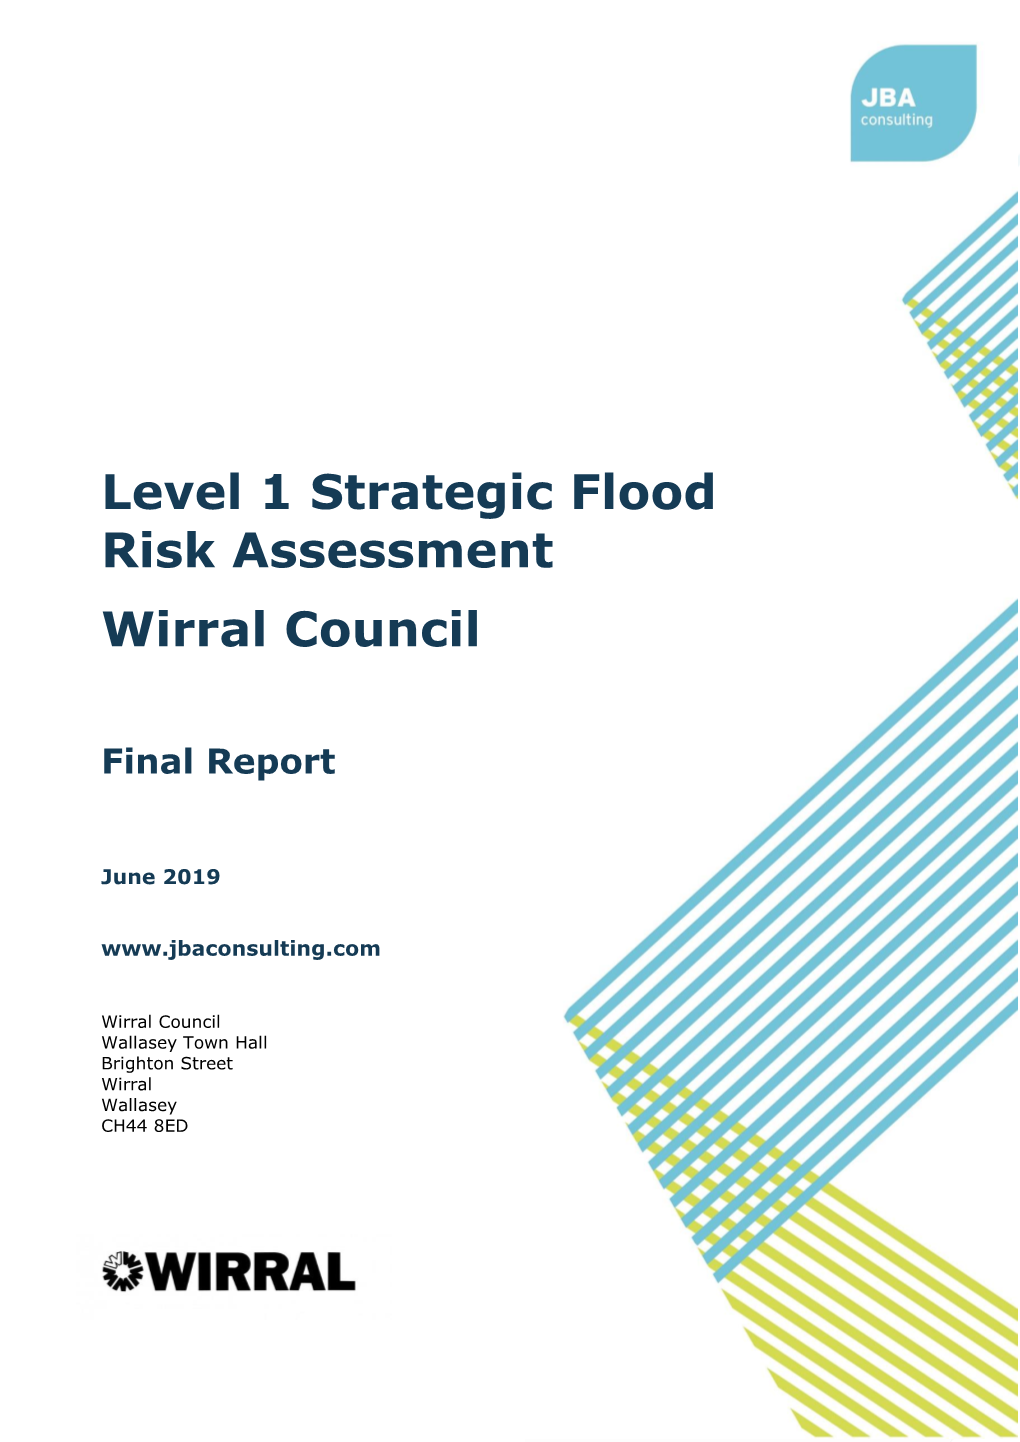 Level 1 Strategic Flood Risk Assessment Wirral Council